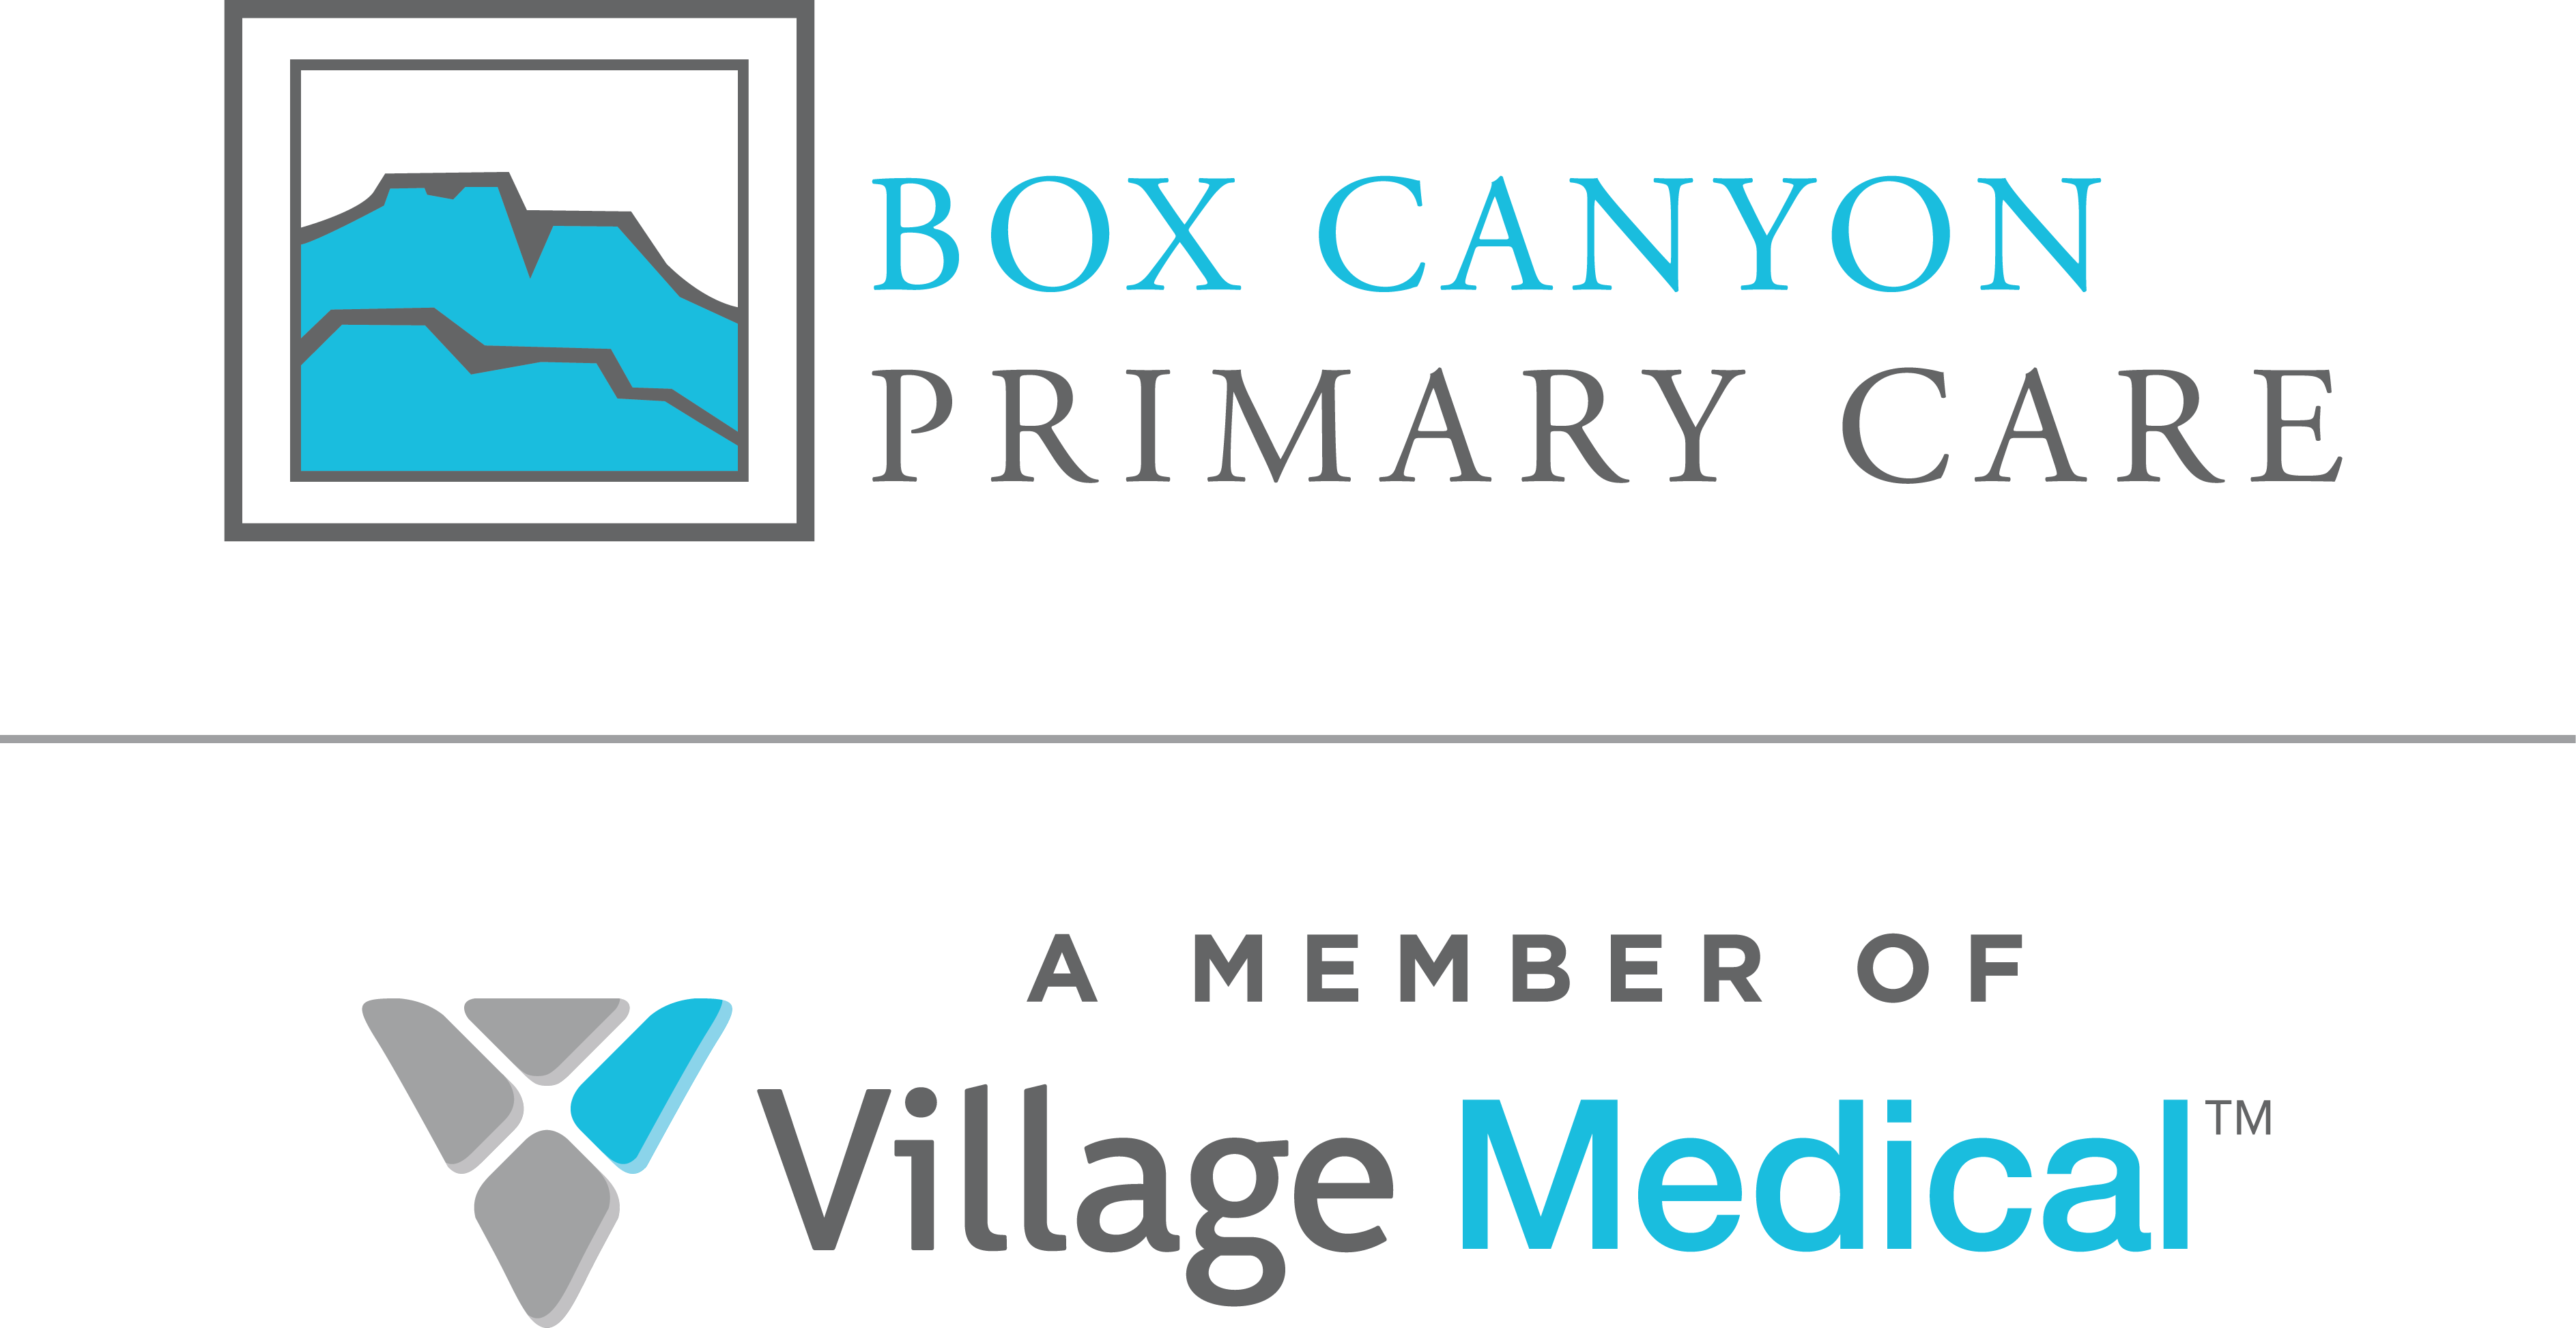 Village Medical - 2647 Box Canyon Dr.  Las Vegas, NV 89128